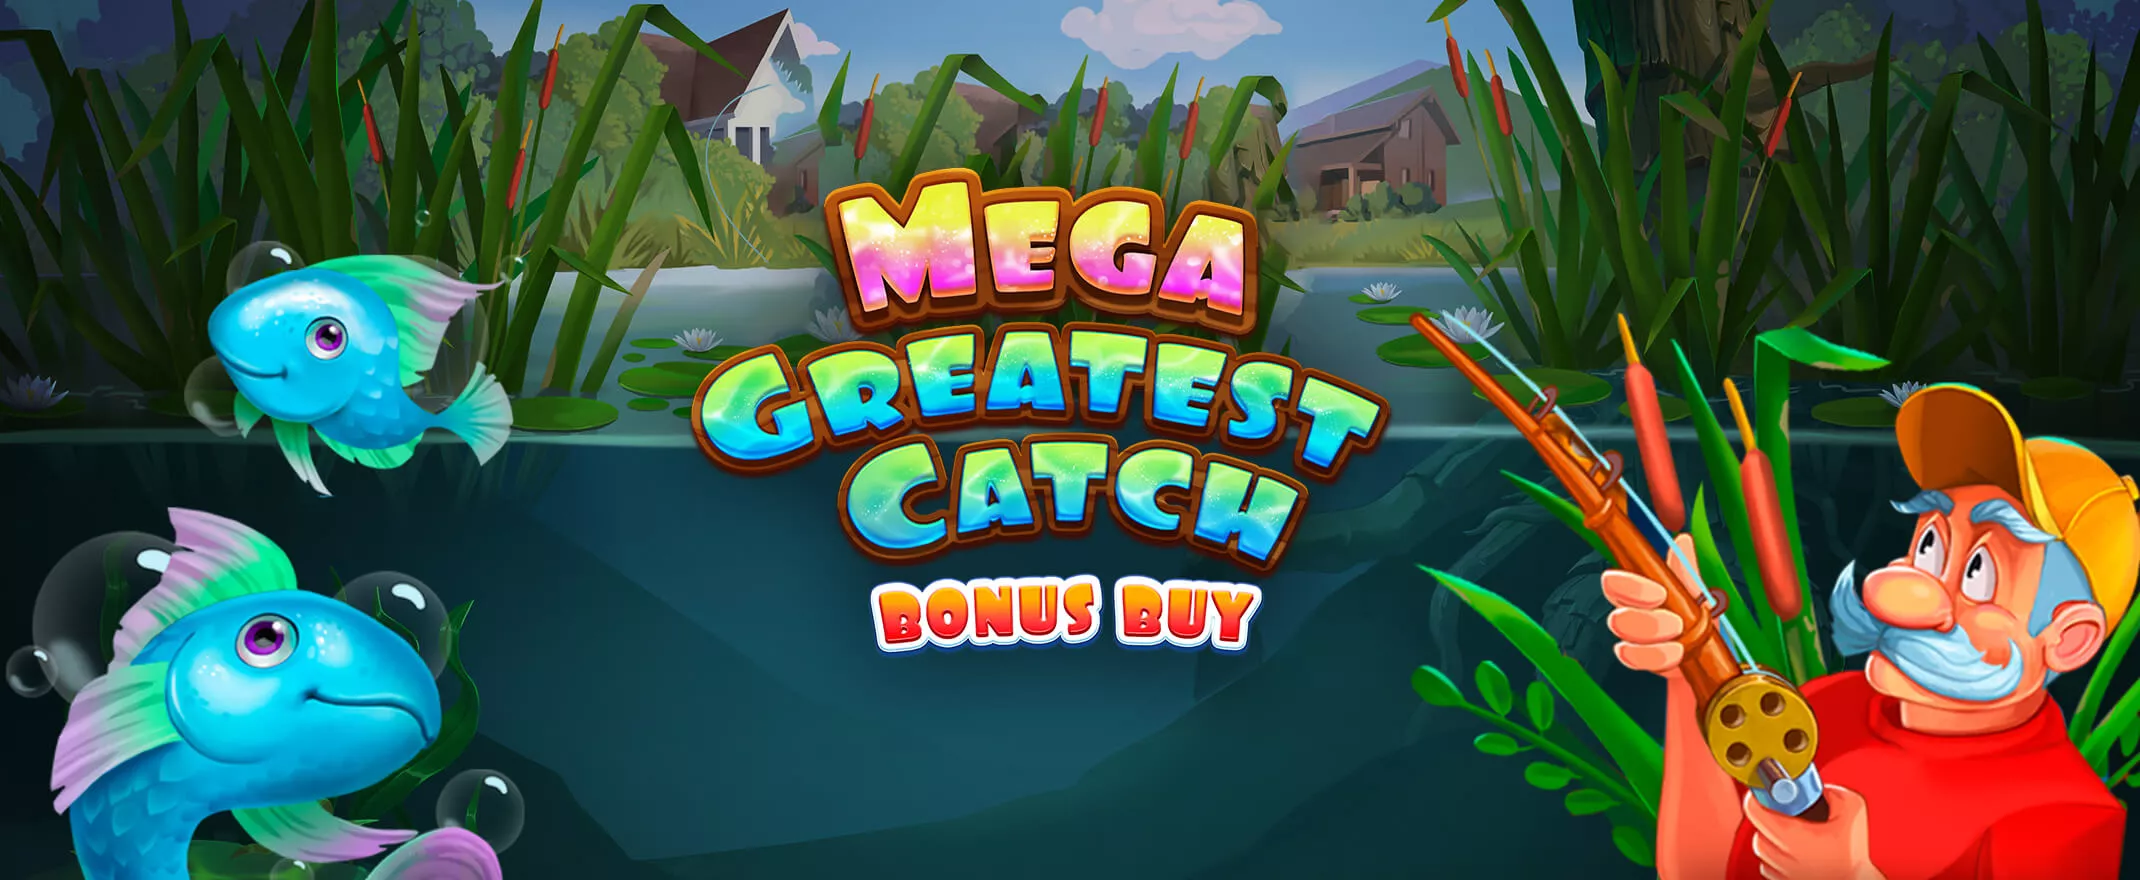 Evoplay Launches Mega Greatest Catch Bonus Buy